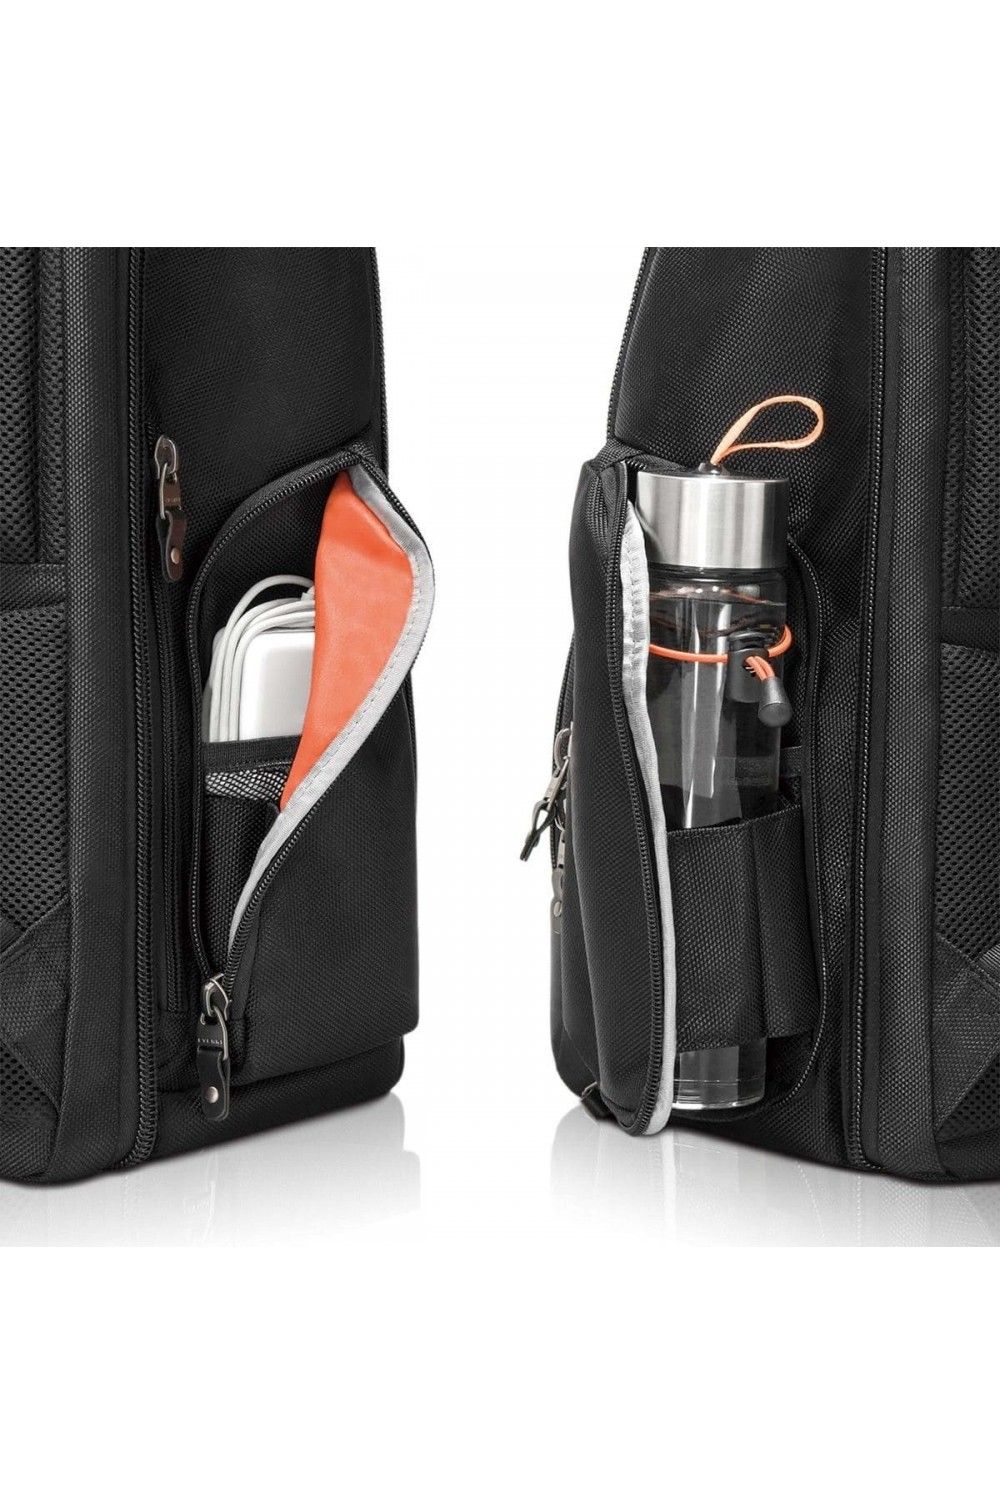 Premium Laptop Backpack Onyx Everki 17.3 inches